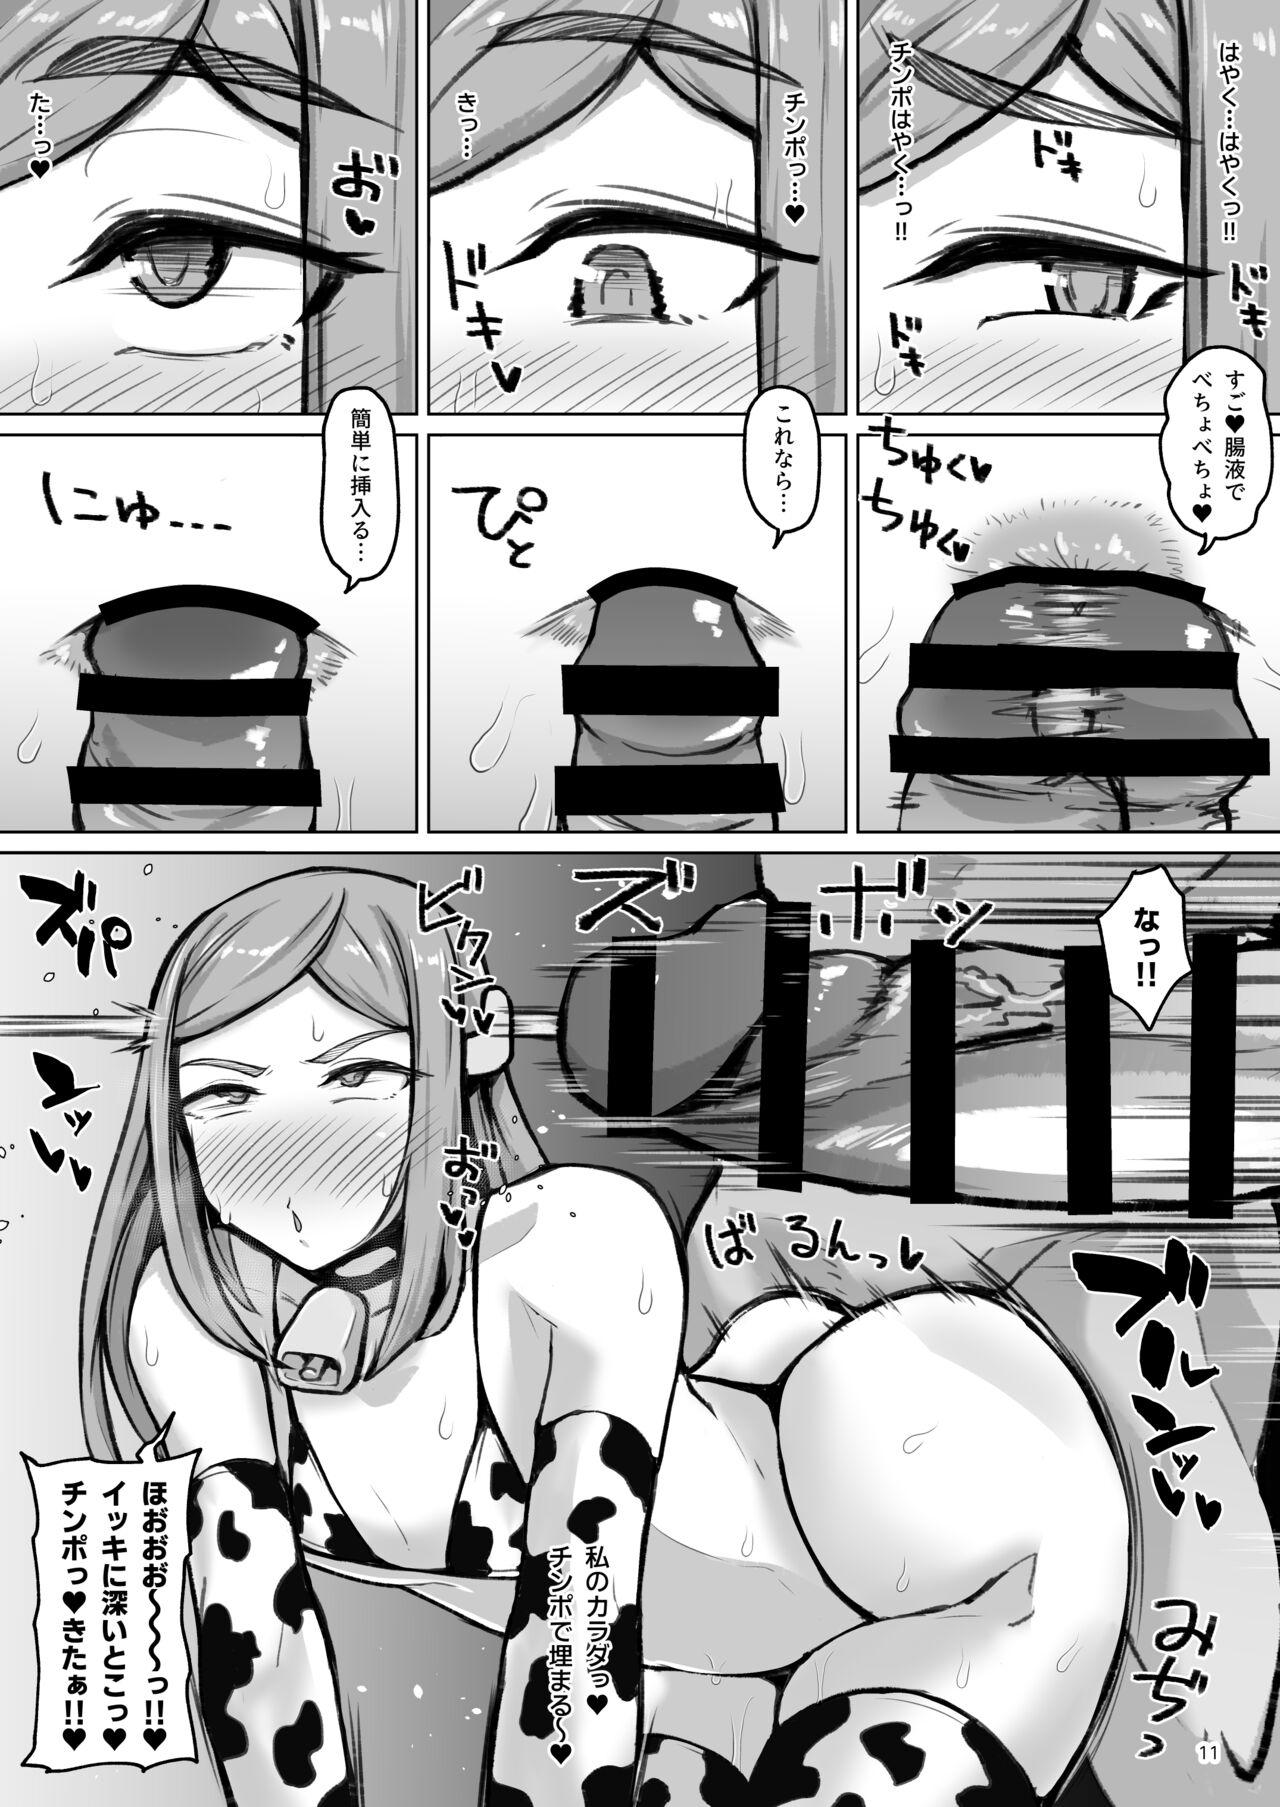 Bra Asuwohorijin Manga Gekijou - Last origin Freaky - Page 10